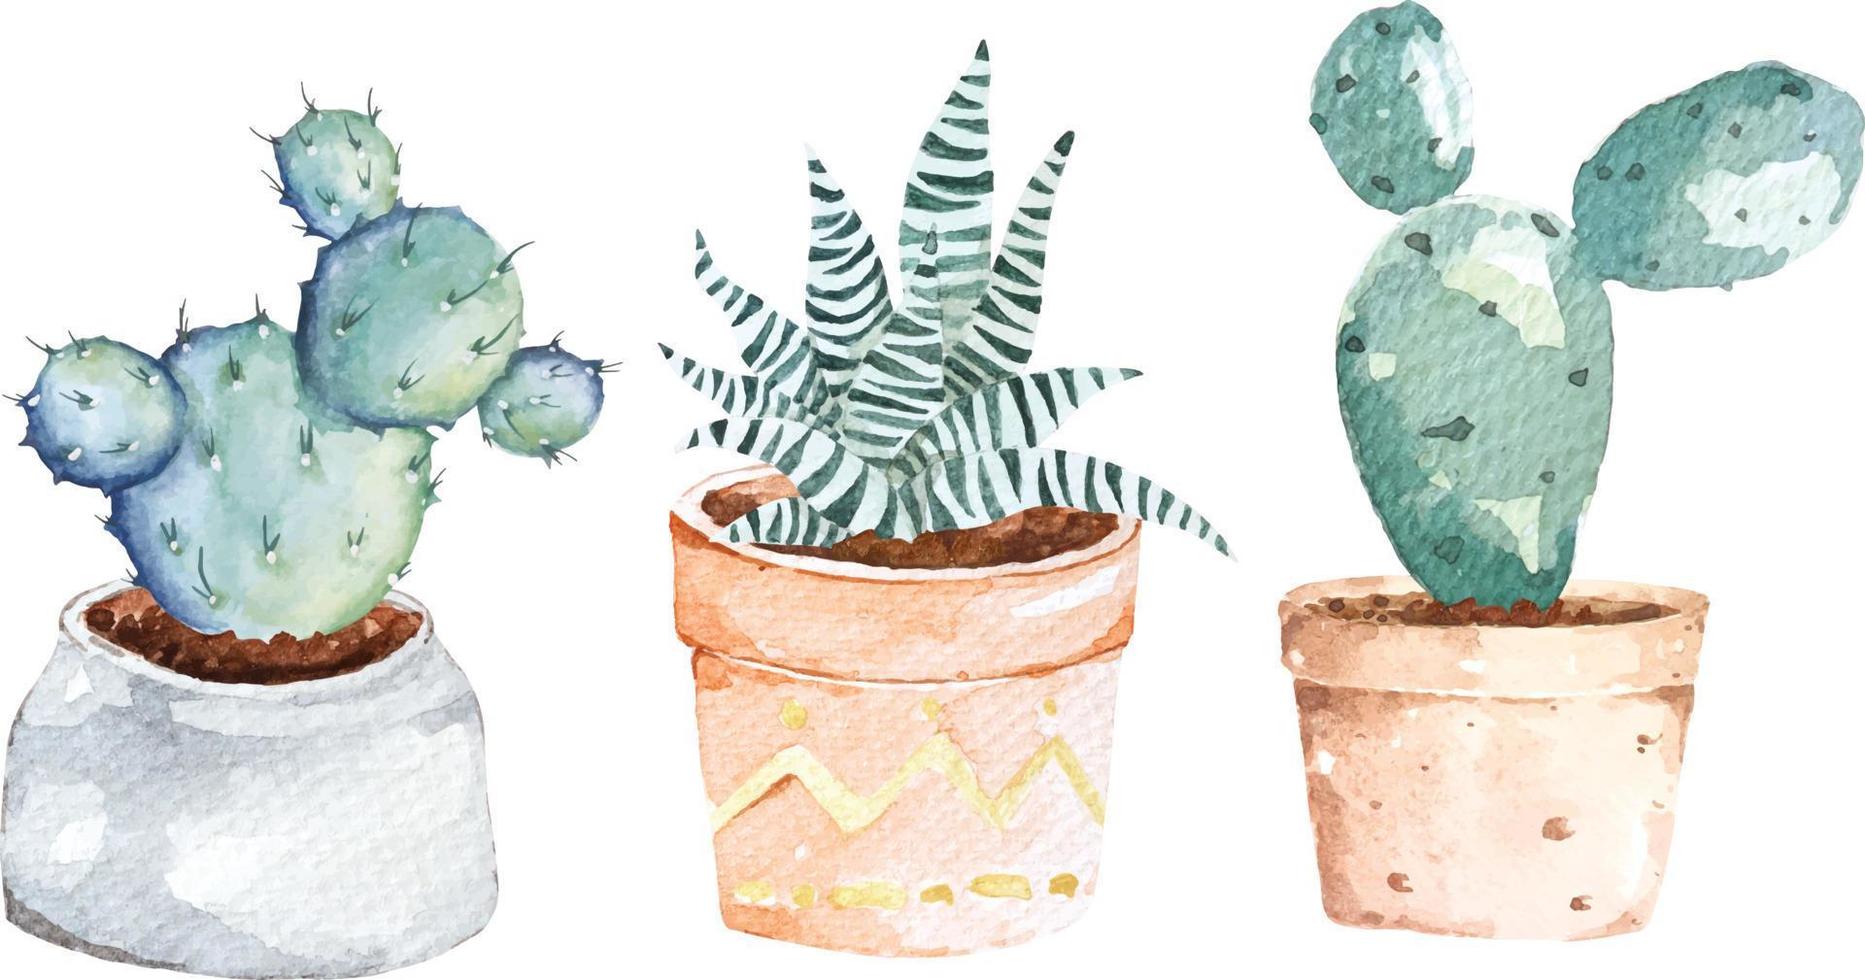 plantas aquarela cactus.cactus na pintura cerâmica pots.botanical. vetor